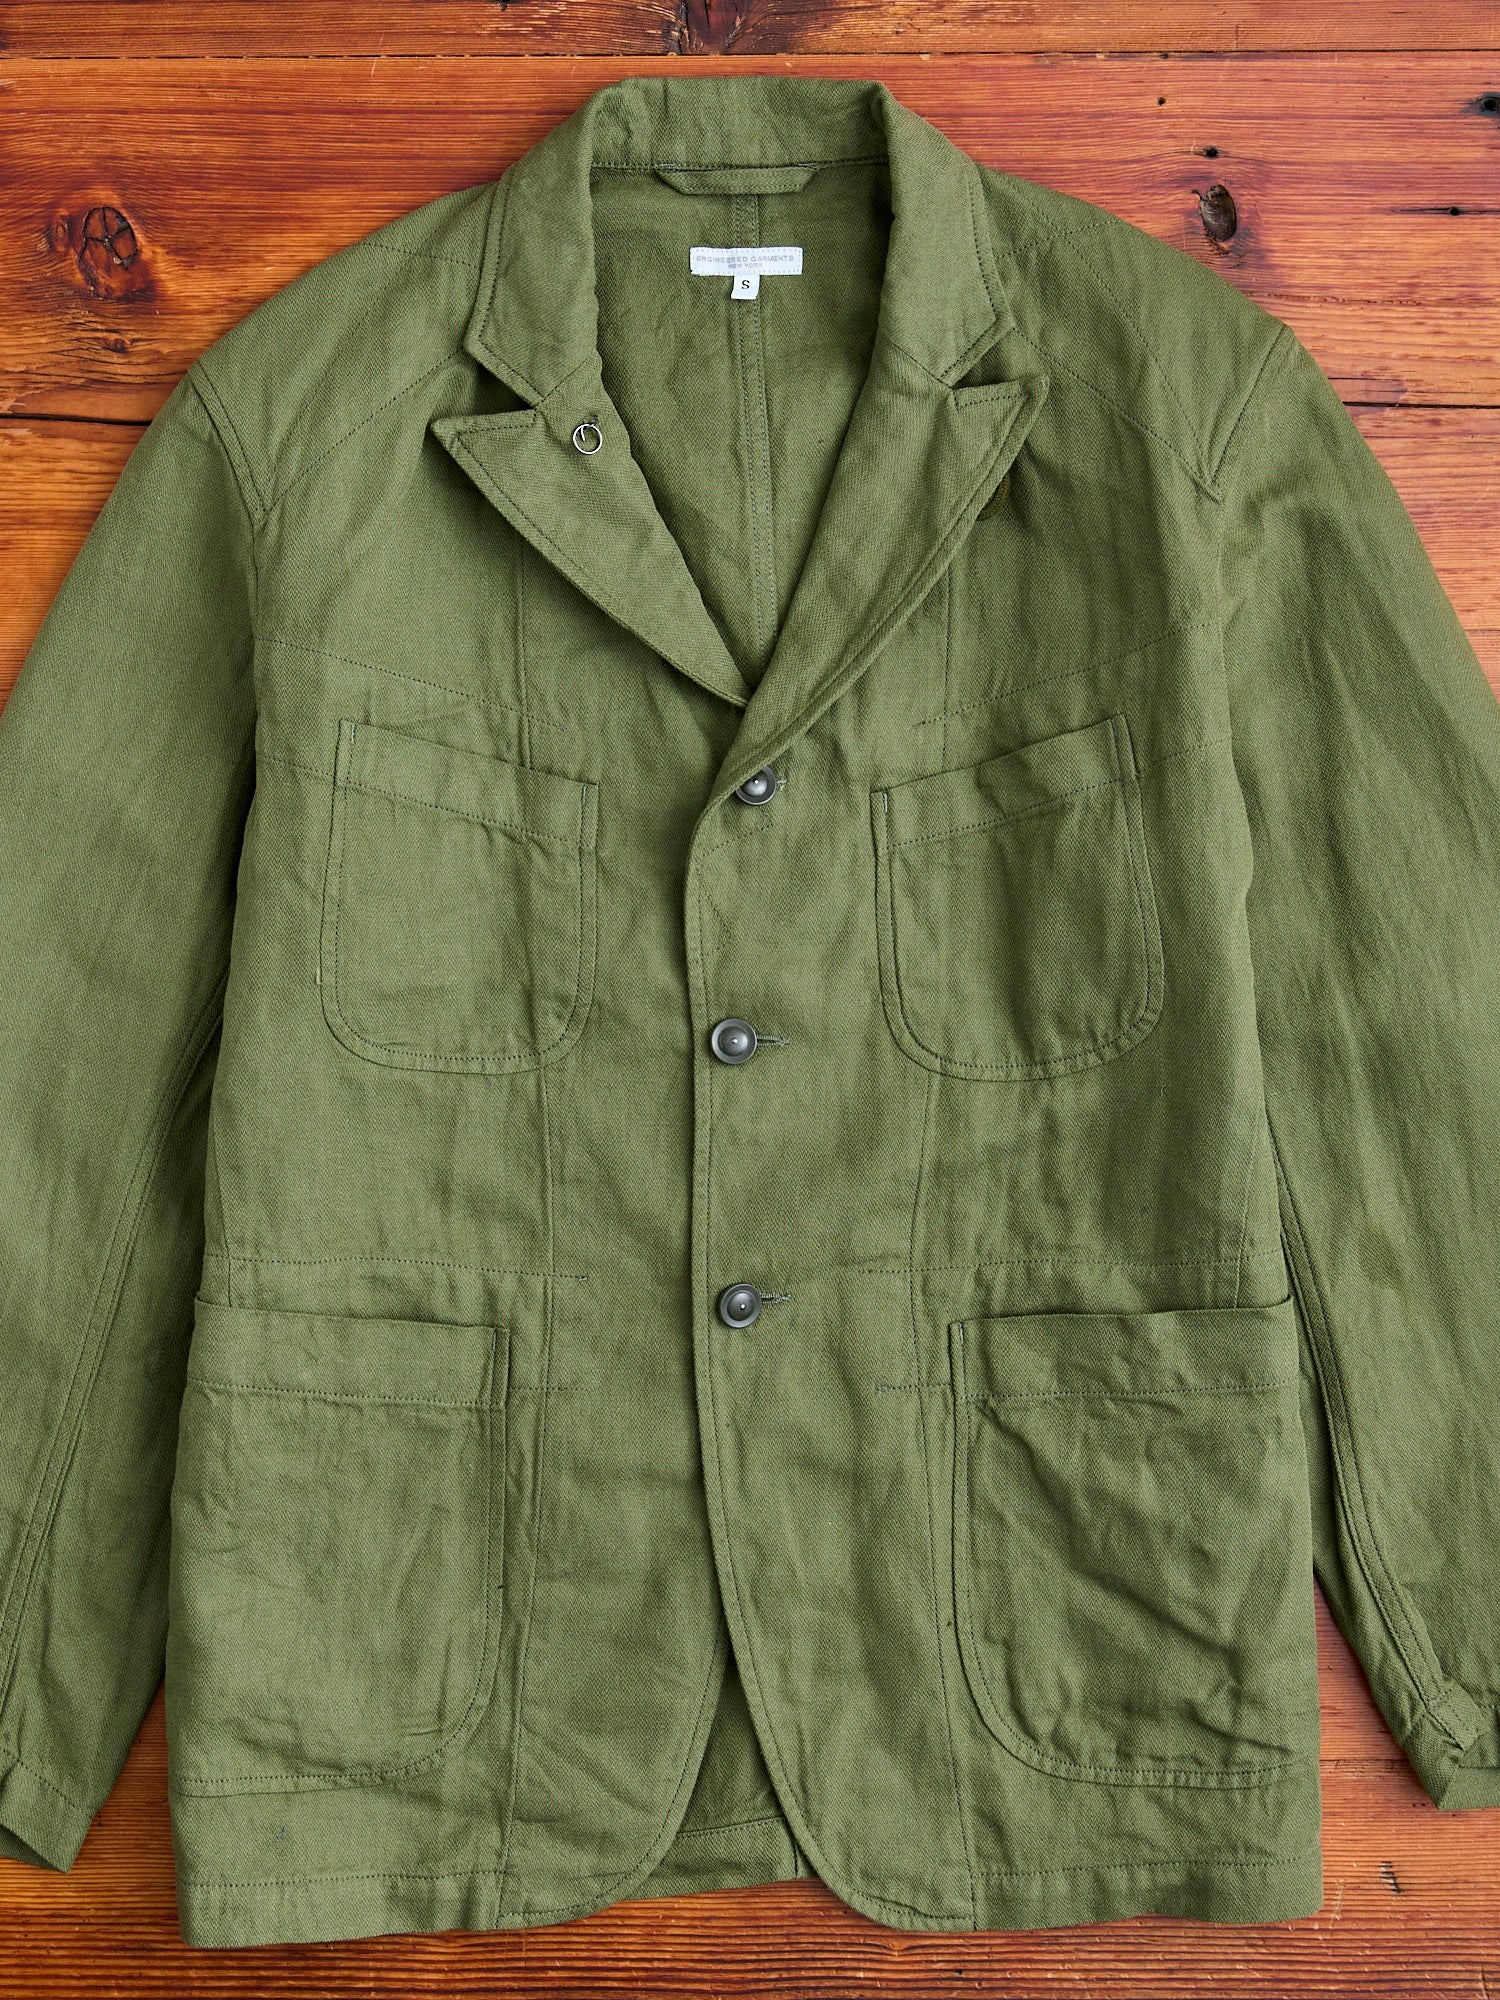 Bedford Jacket in Olive Cotton Hemp Satin - 1